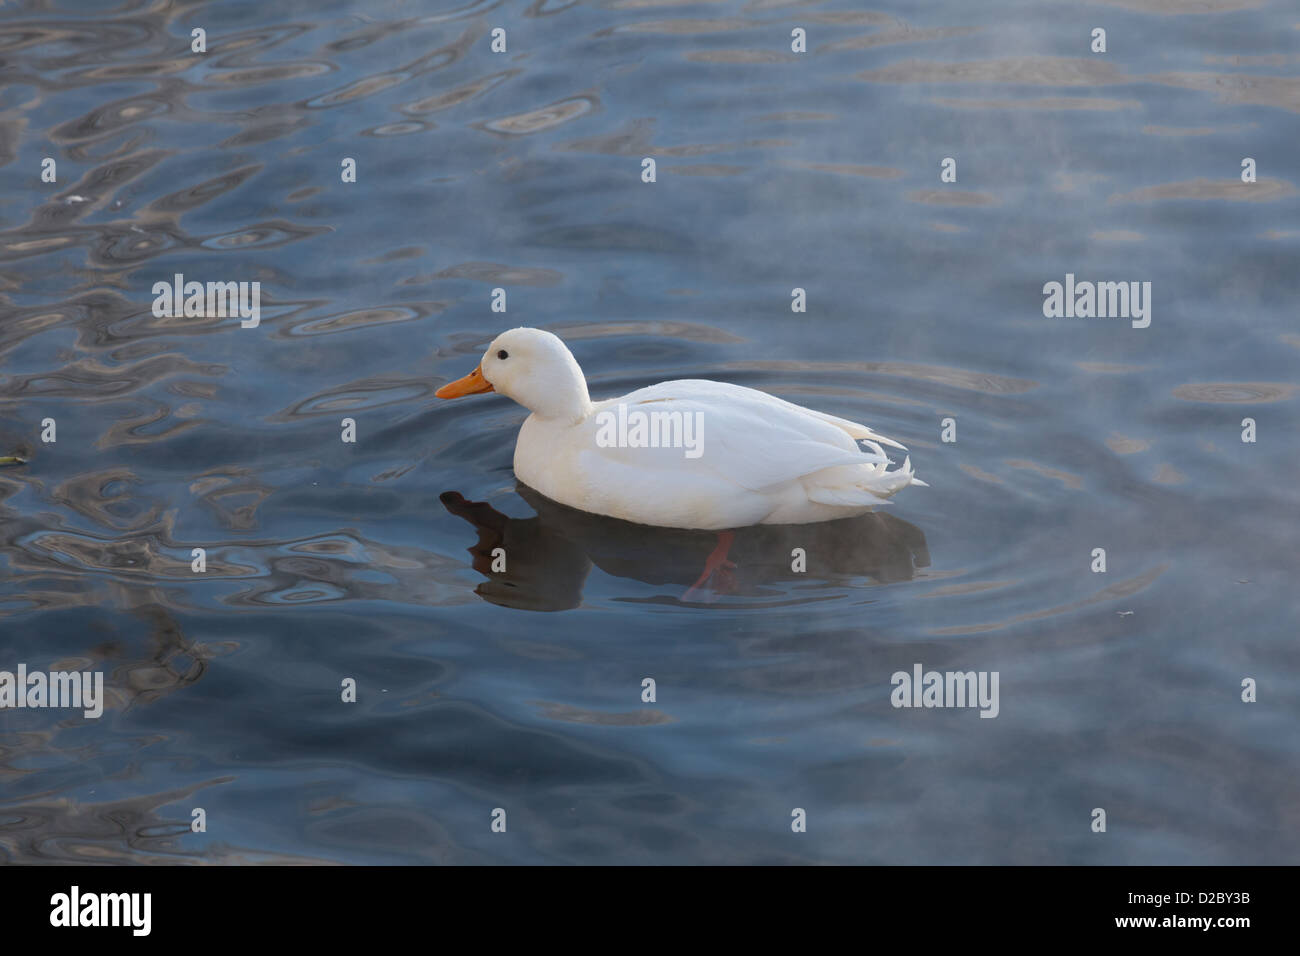 Albino-Ente schwimmt in White Lake. Schlosspark, Gattschina, Leningrad Oblast, Russland. Stockfoto